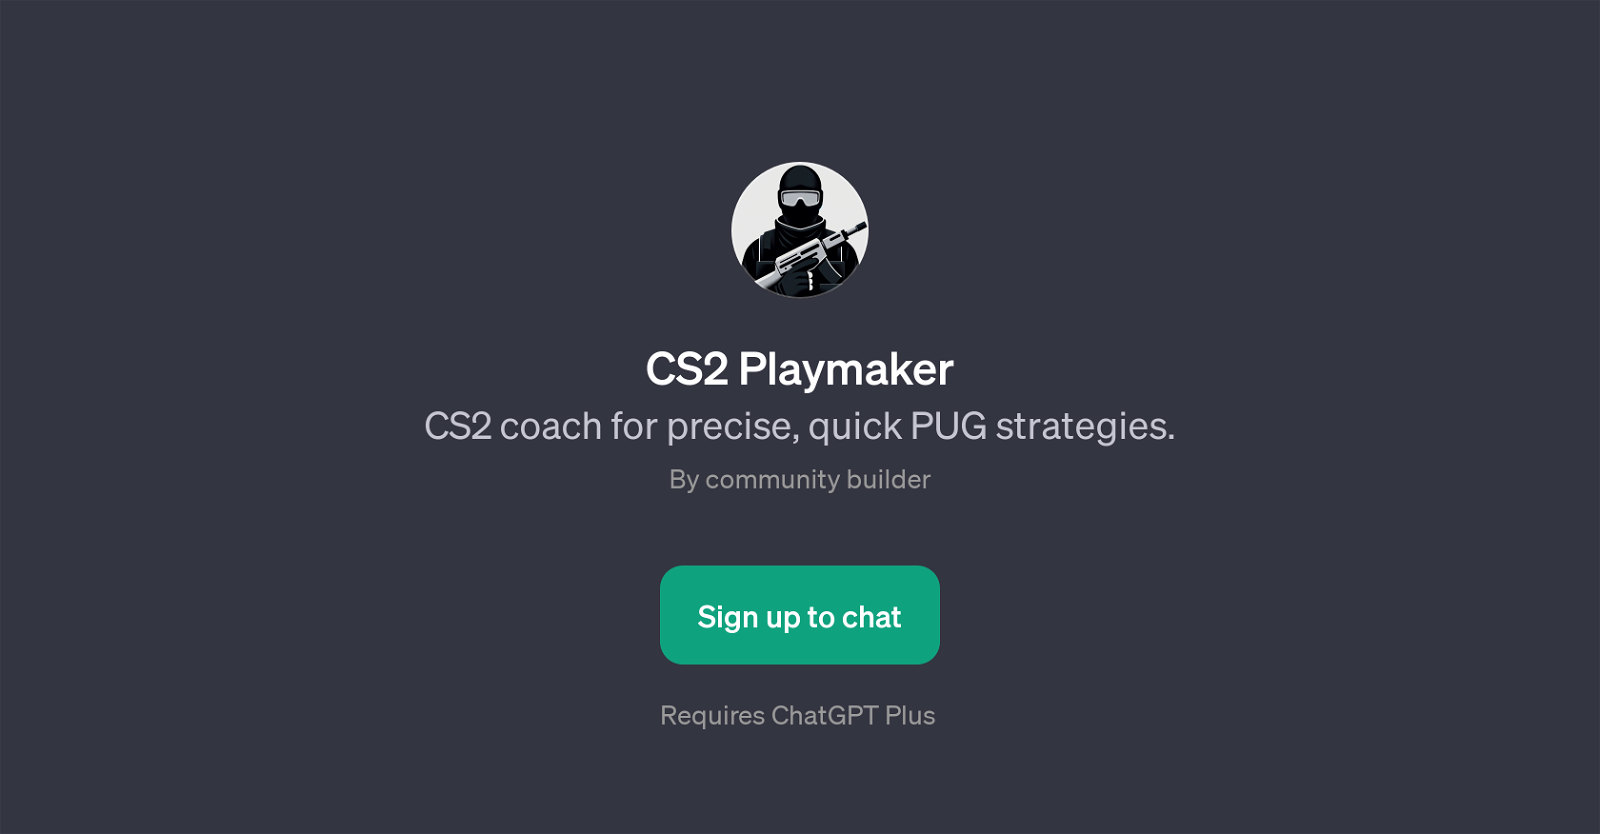 CS2 Playmaker website